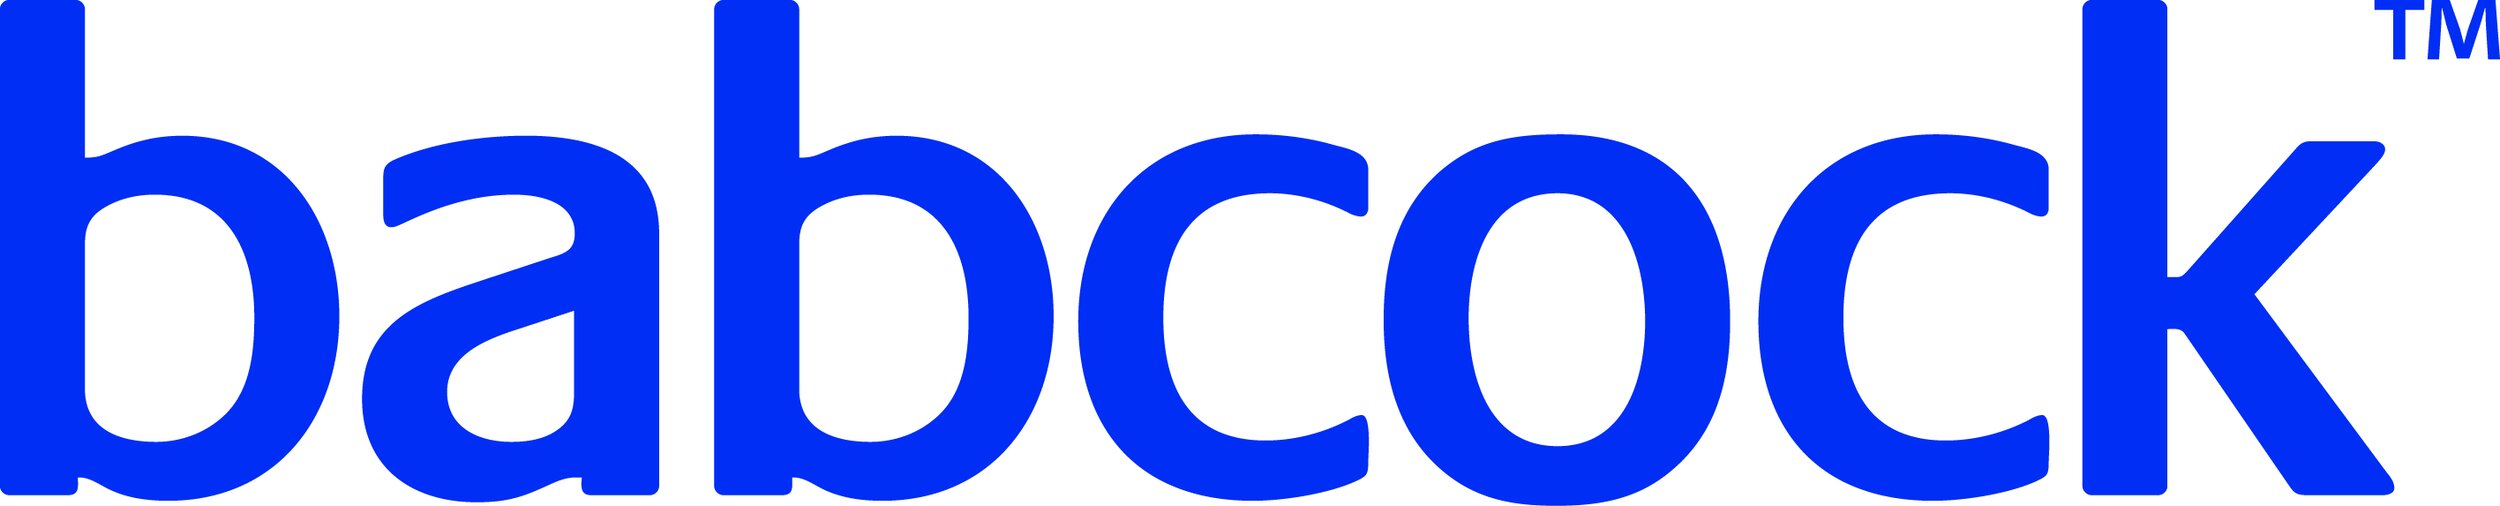 Babcock_Type_Only_BLUE_Logo.jpg